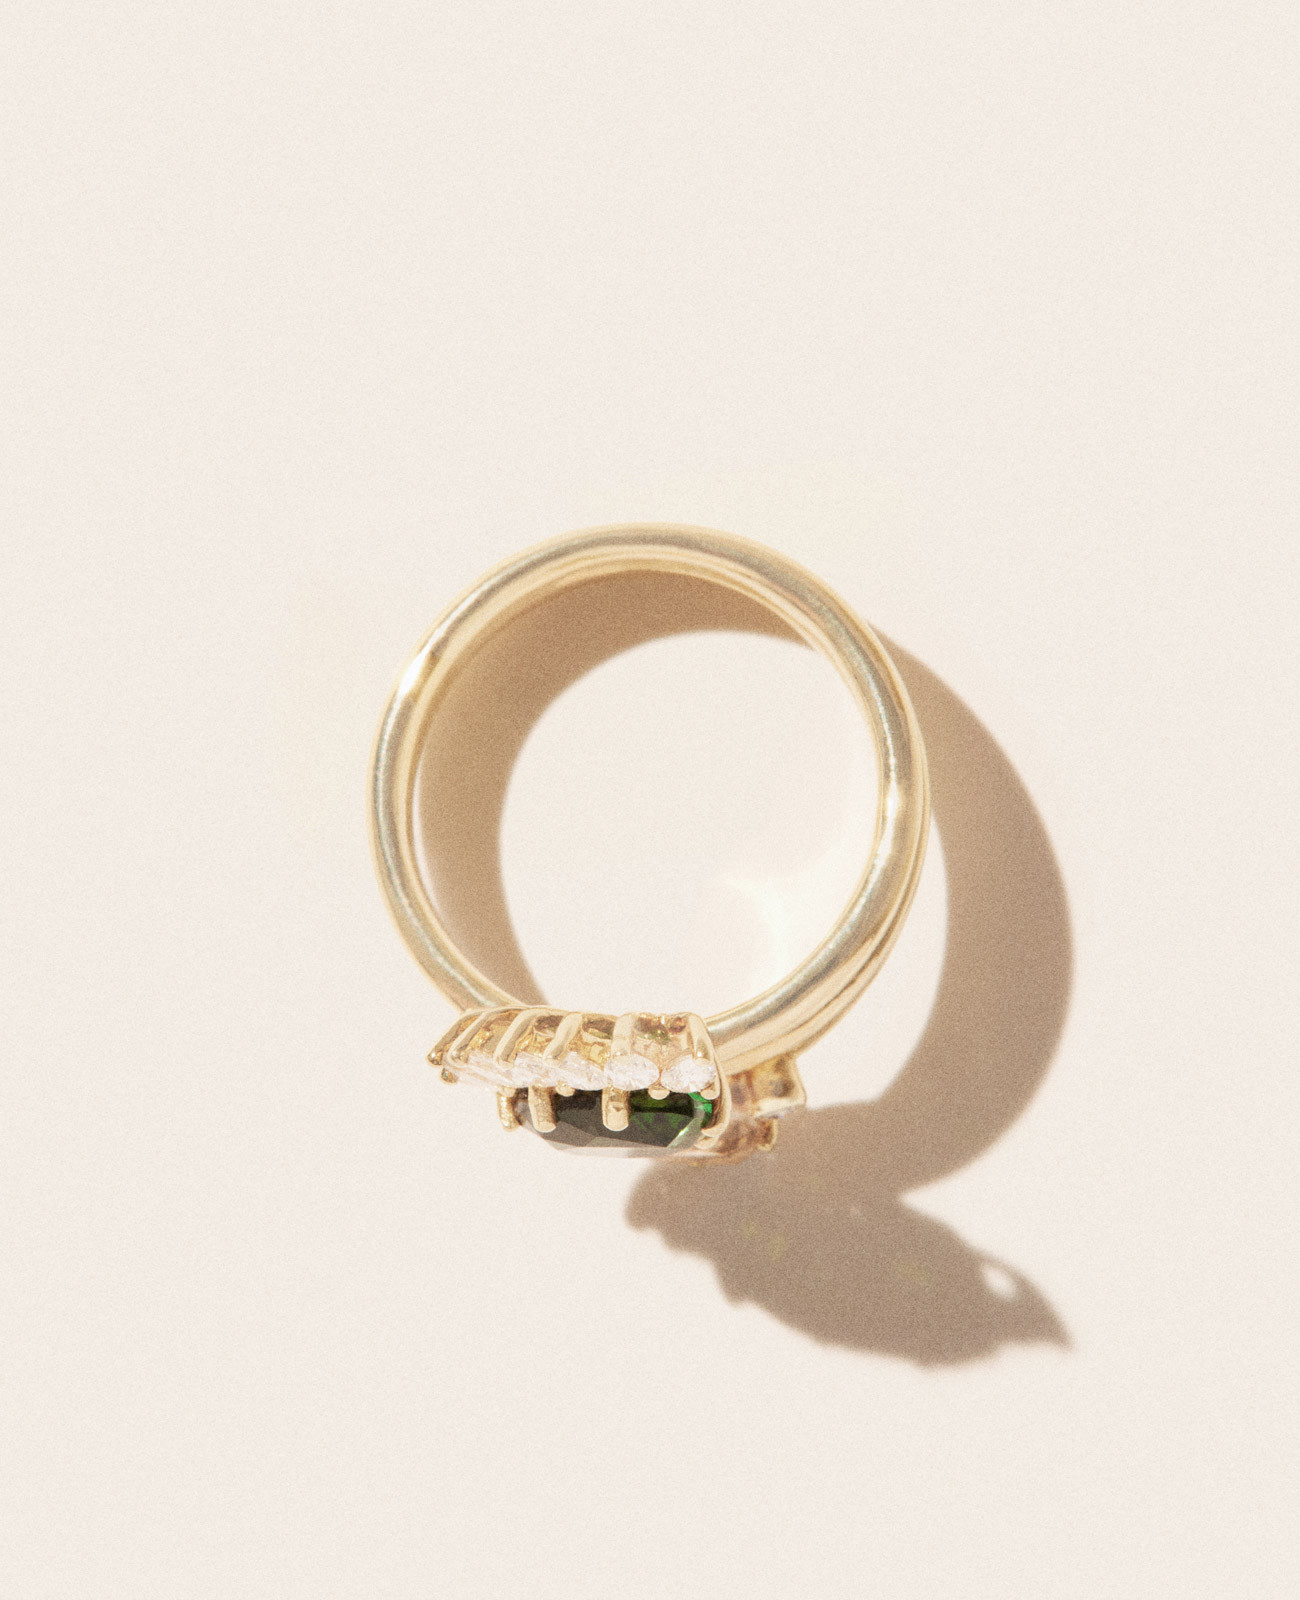 SUN N°4 GREEN TOURMALINE ring pascale monvoisin jewelry paris